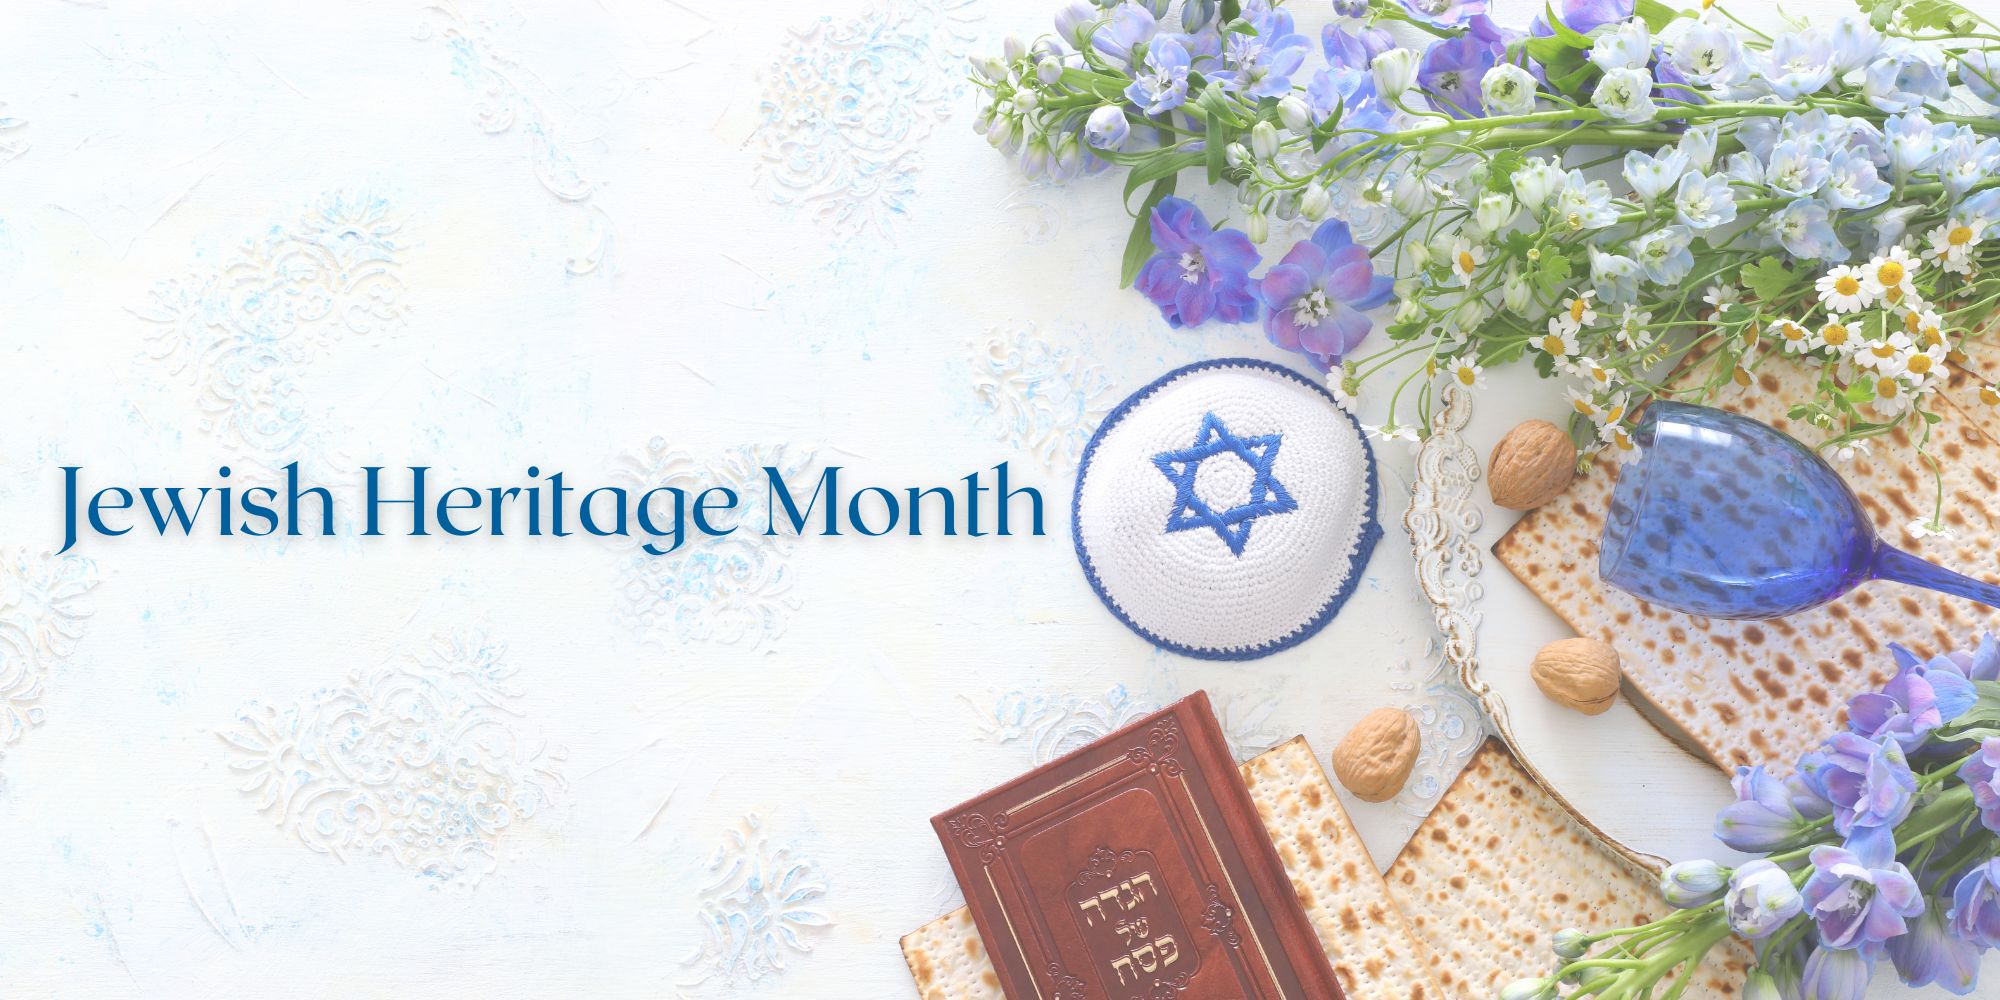 Jewish Heritage Month